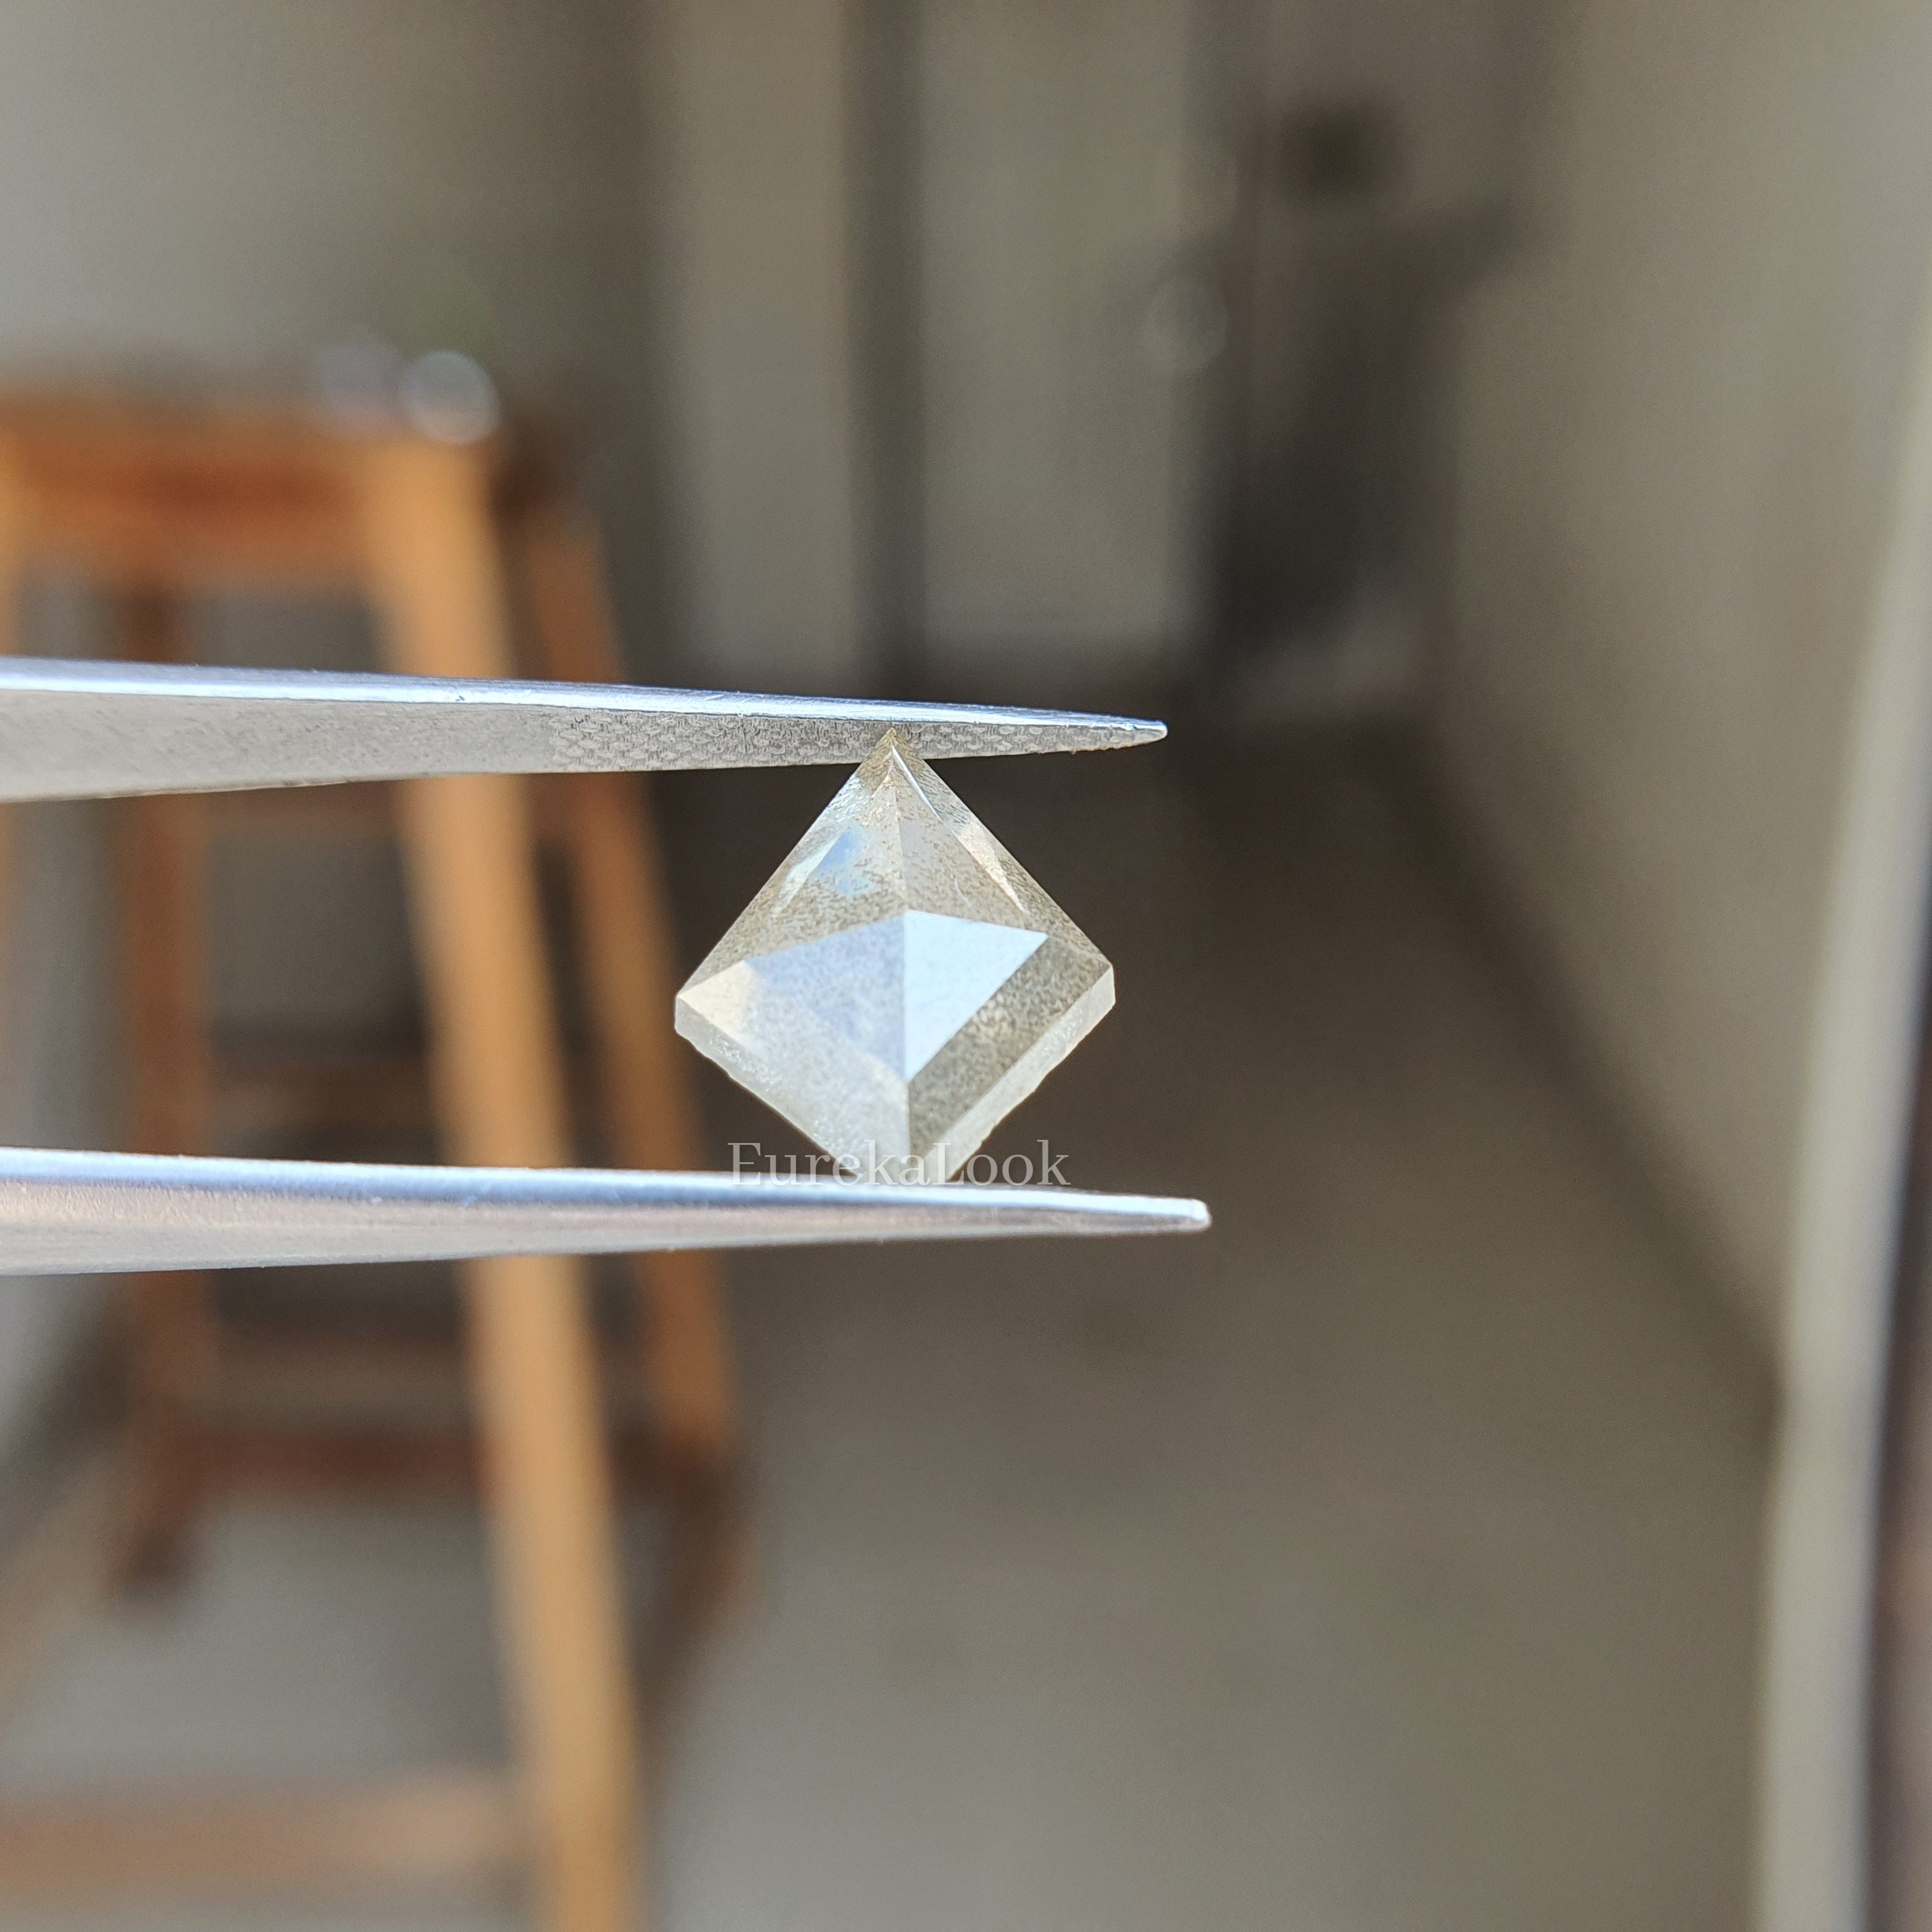 Kite Cut Salt and Pepper Moissanite Diamond - Eurekalook